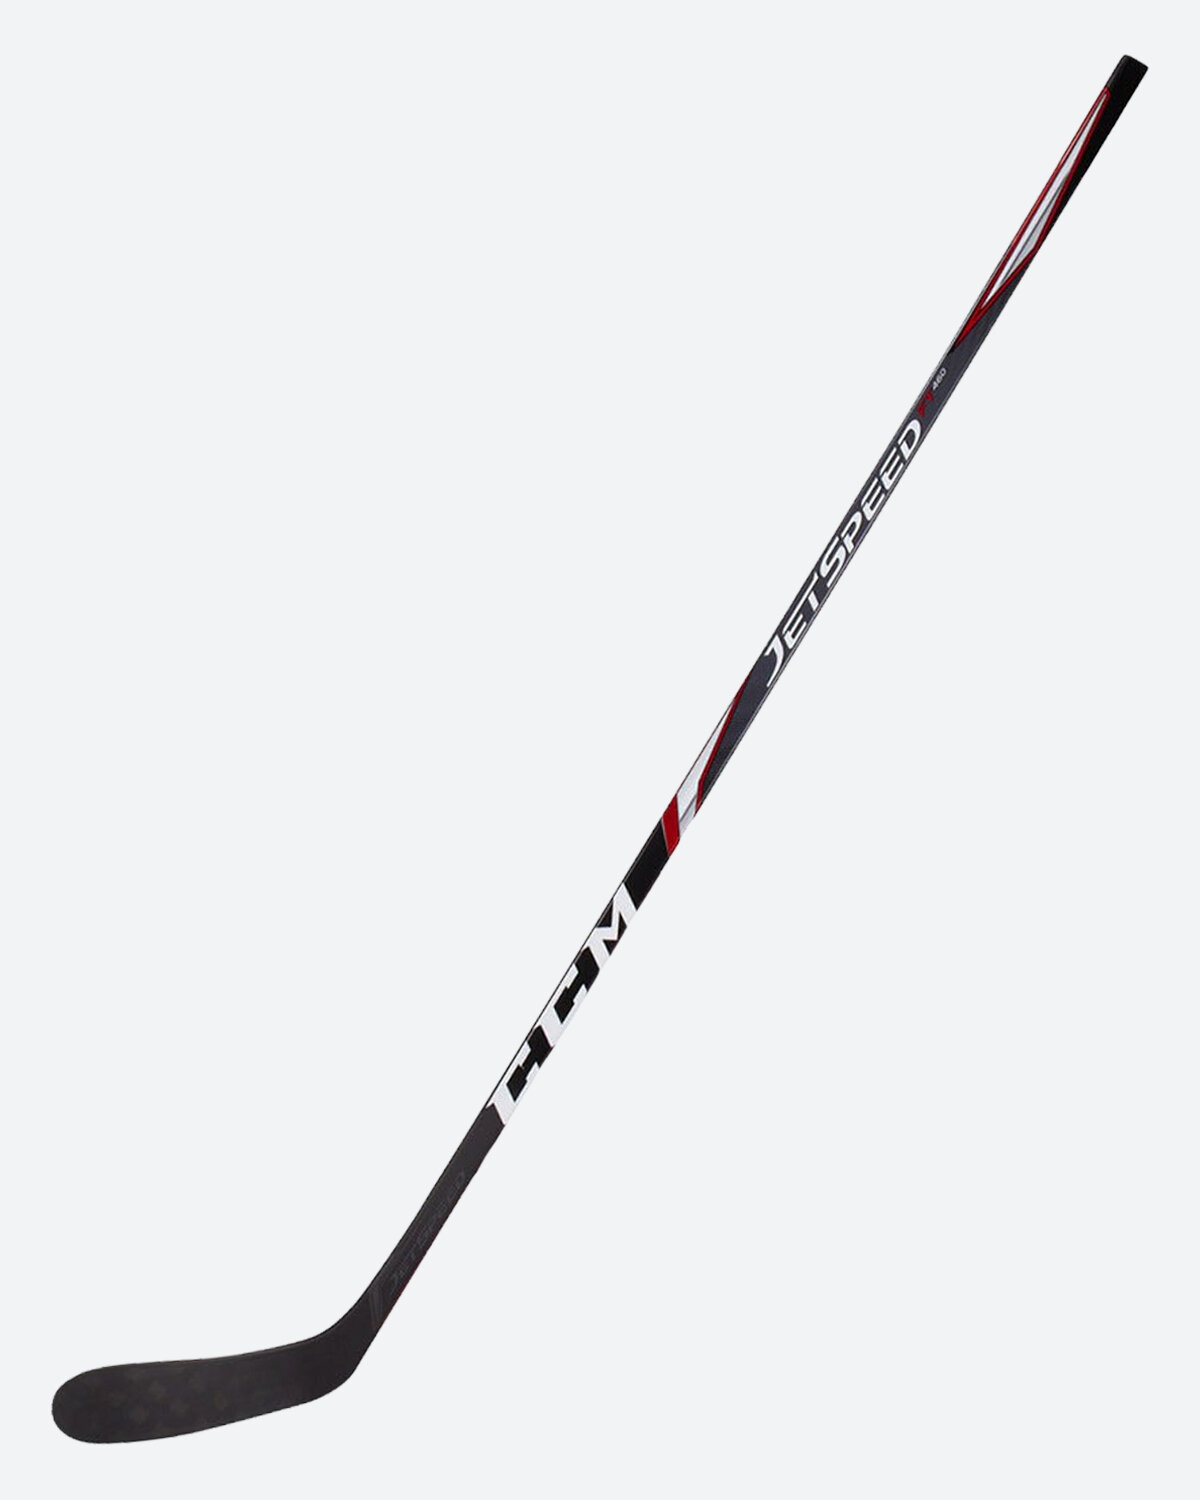 Хоккейная клюшка CCM JETSPEED 460 INT, 124 см, Р29, правый хват (55)